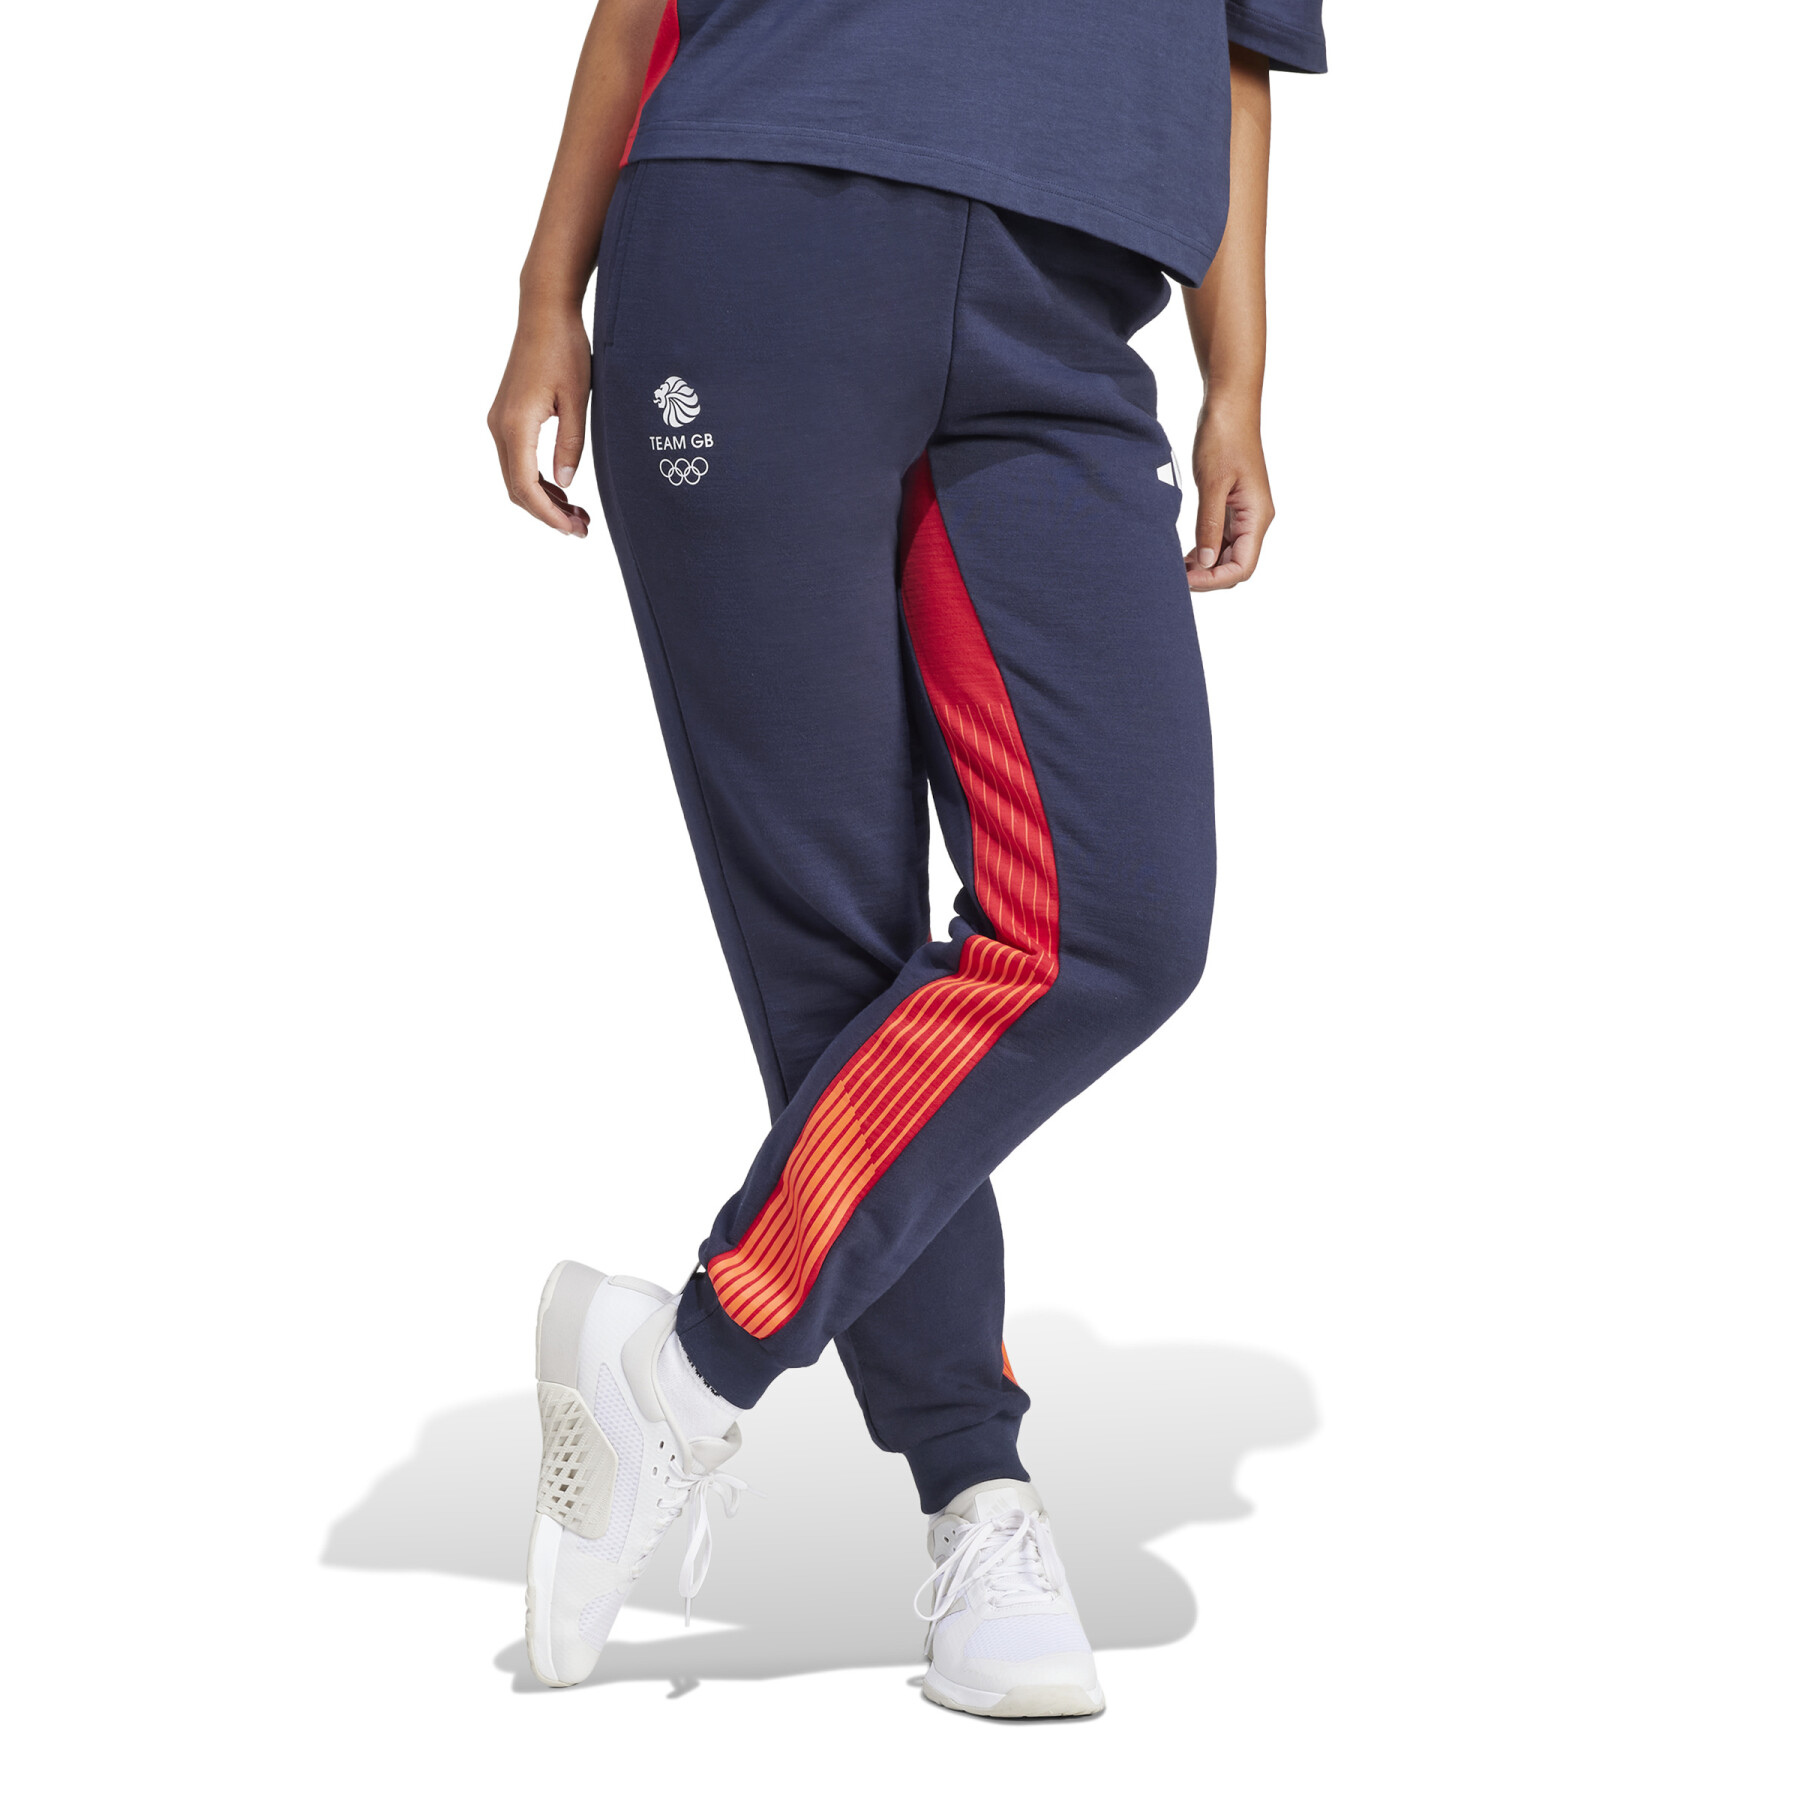 Women's cargo pants adidas Team GB Dance